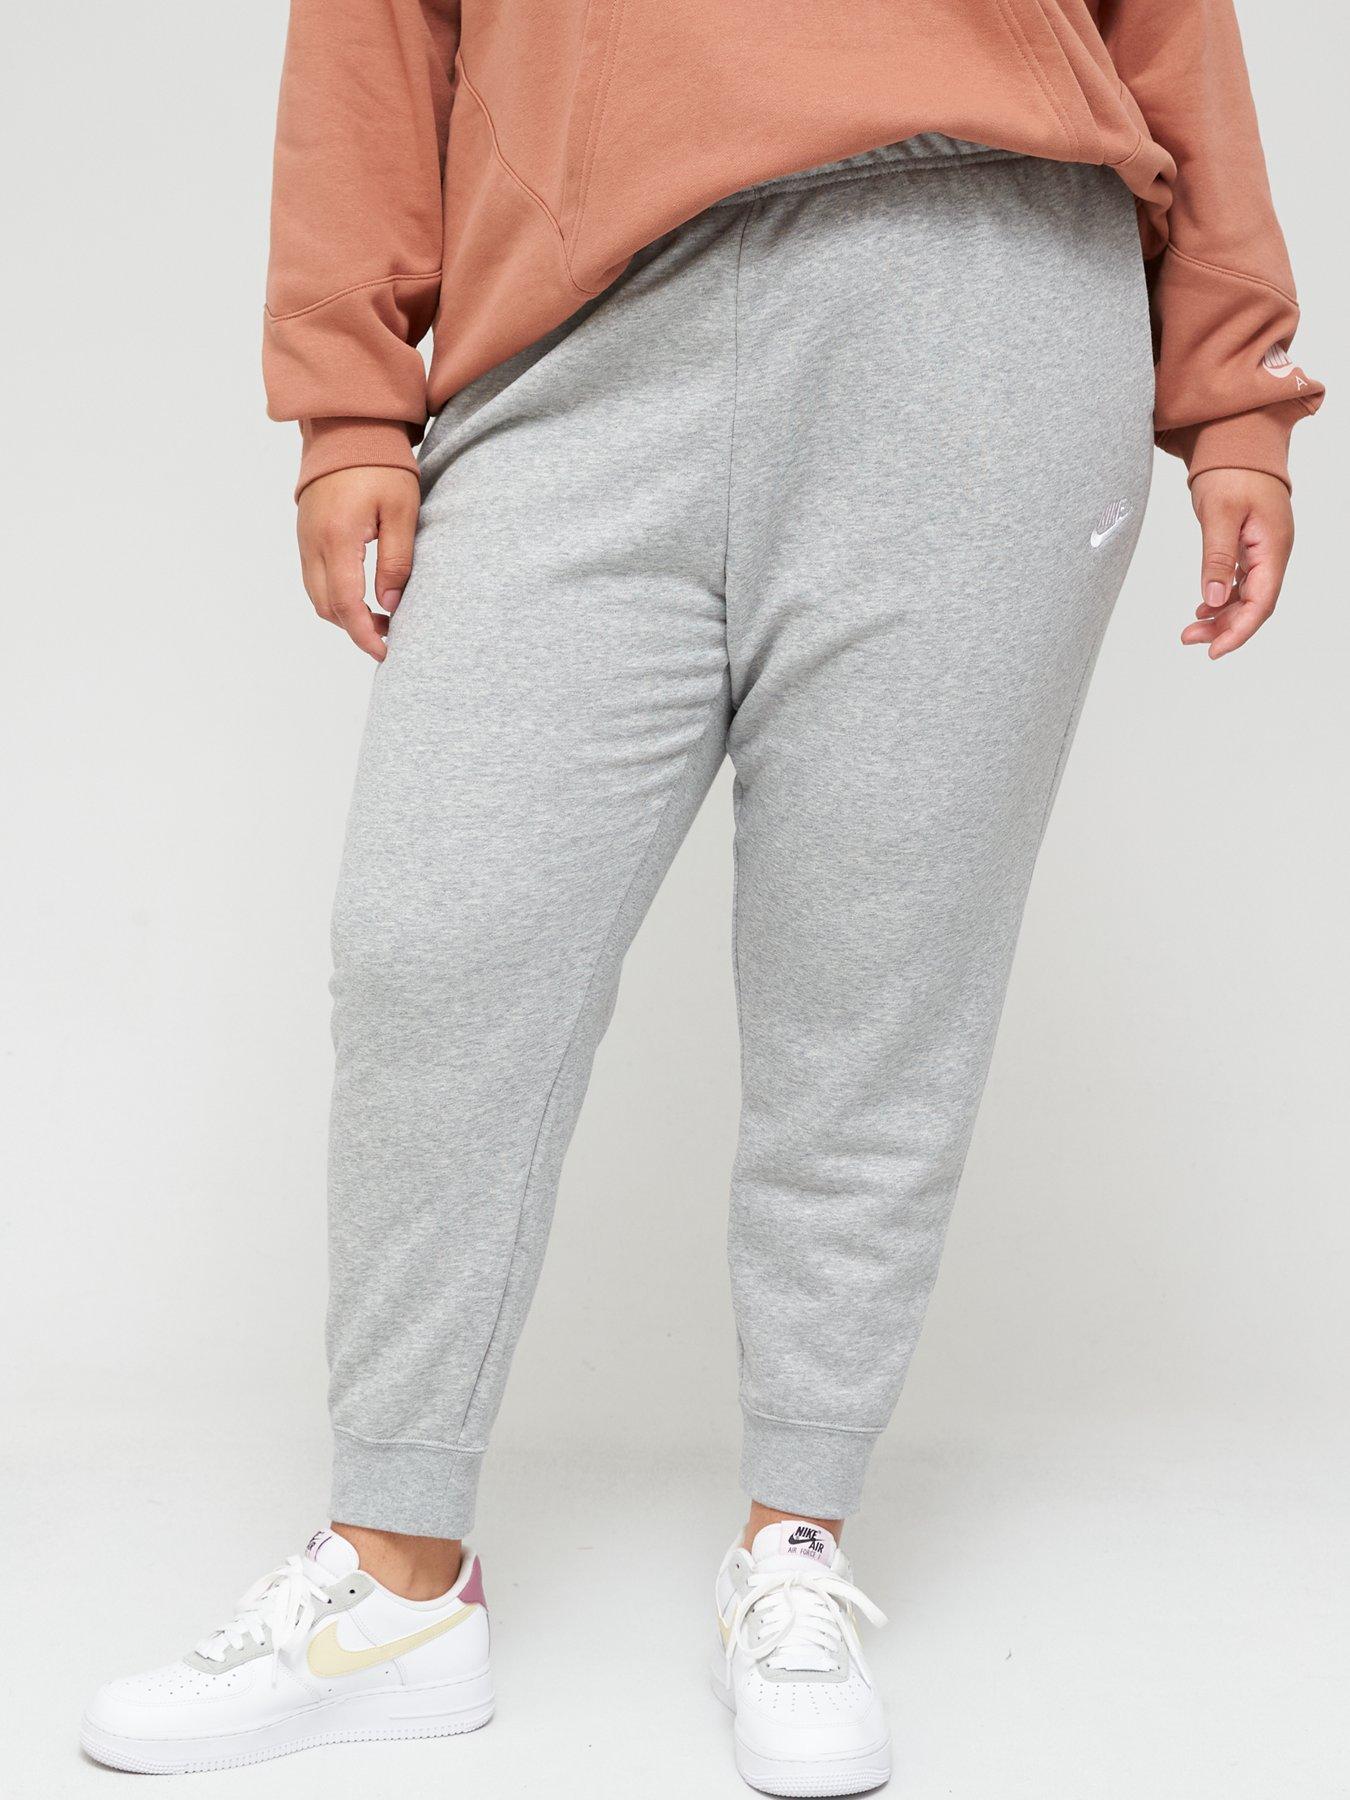 NEW Nike Sportswear Women’s Club Fleece Shorts - Heather Gray - Plus Size  2X 